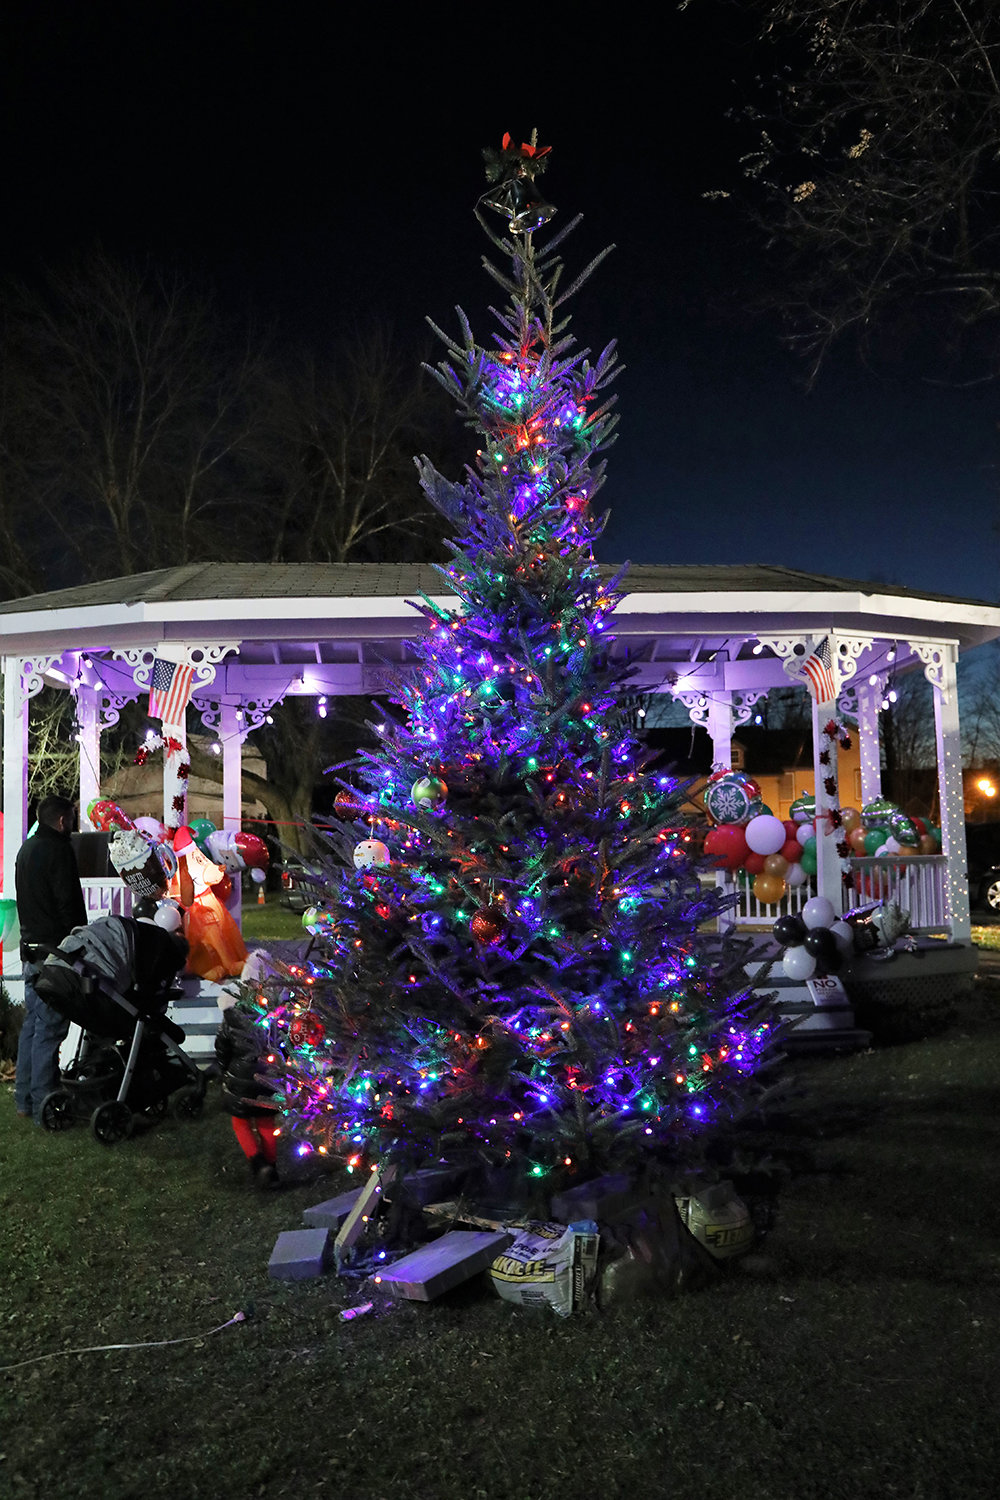 The lit Christmas Tree kicks off the official start of the holiday season.